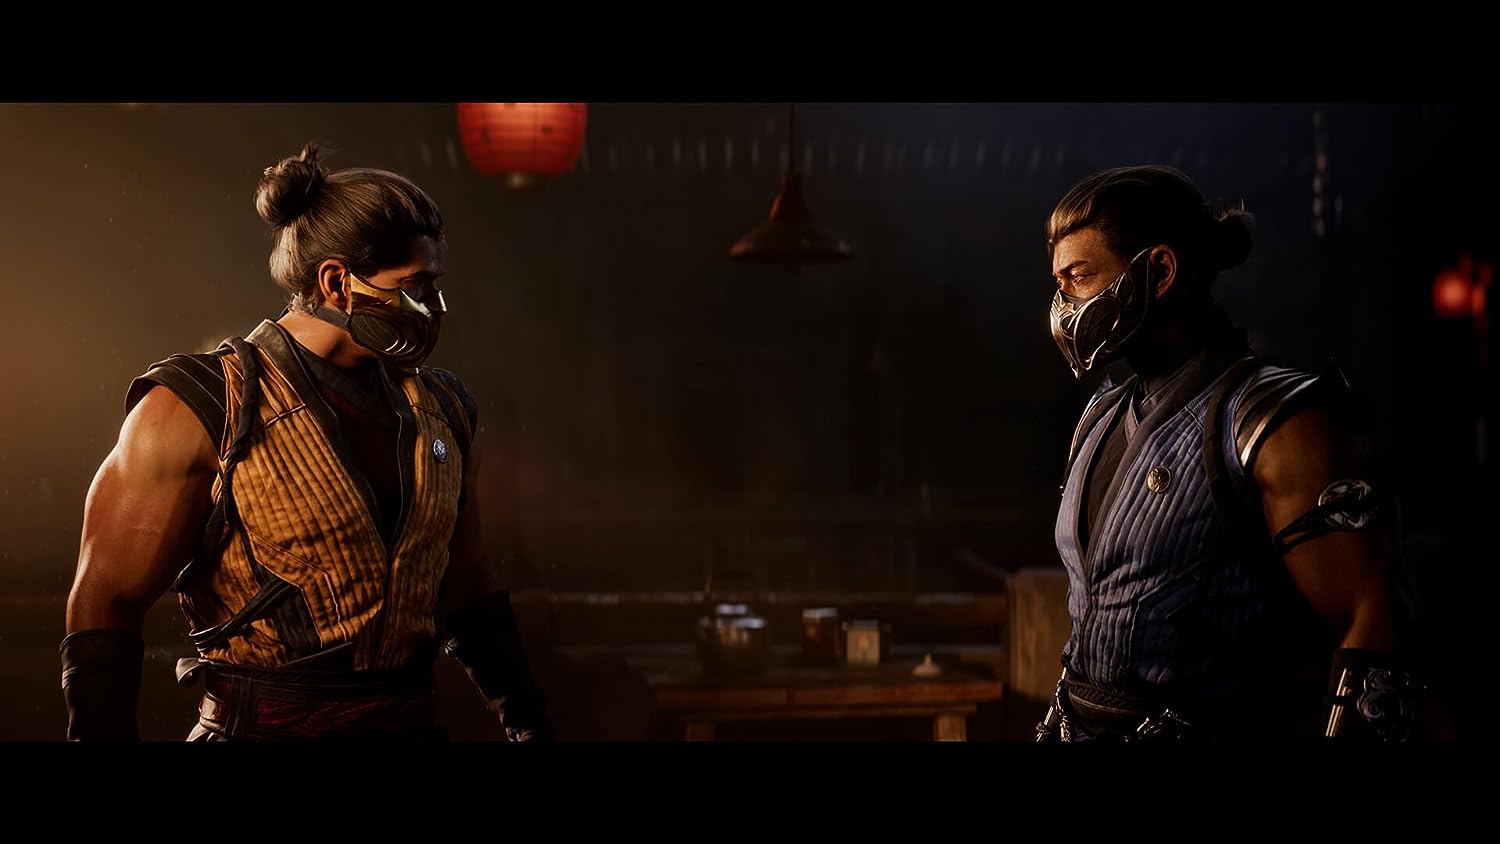 Jogo Mortal Kombat 1 para Xbox Series X no Paraguai - Atacado